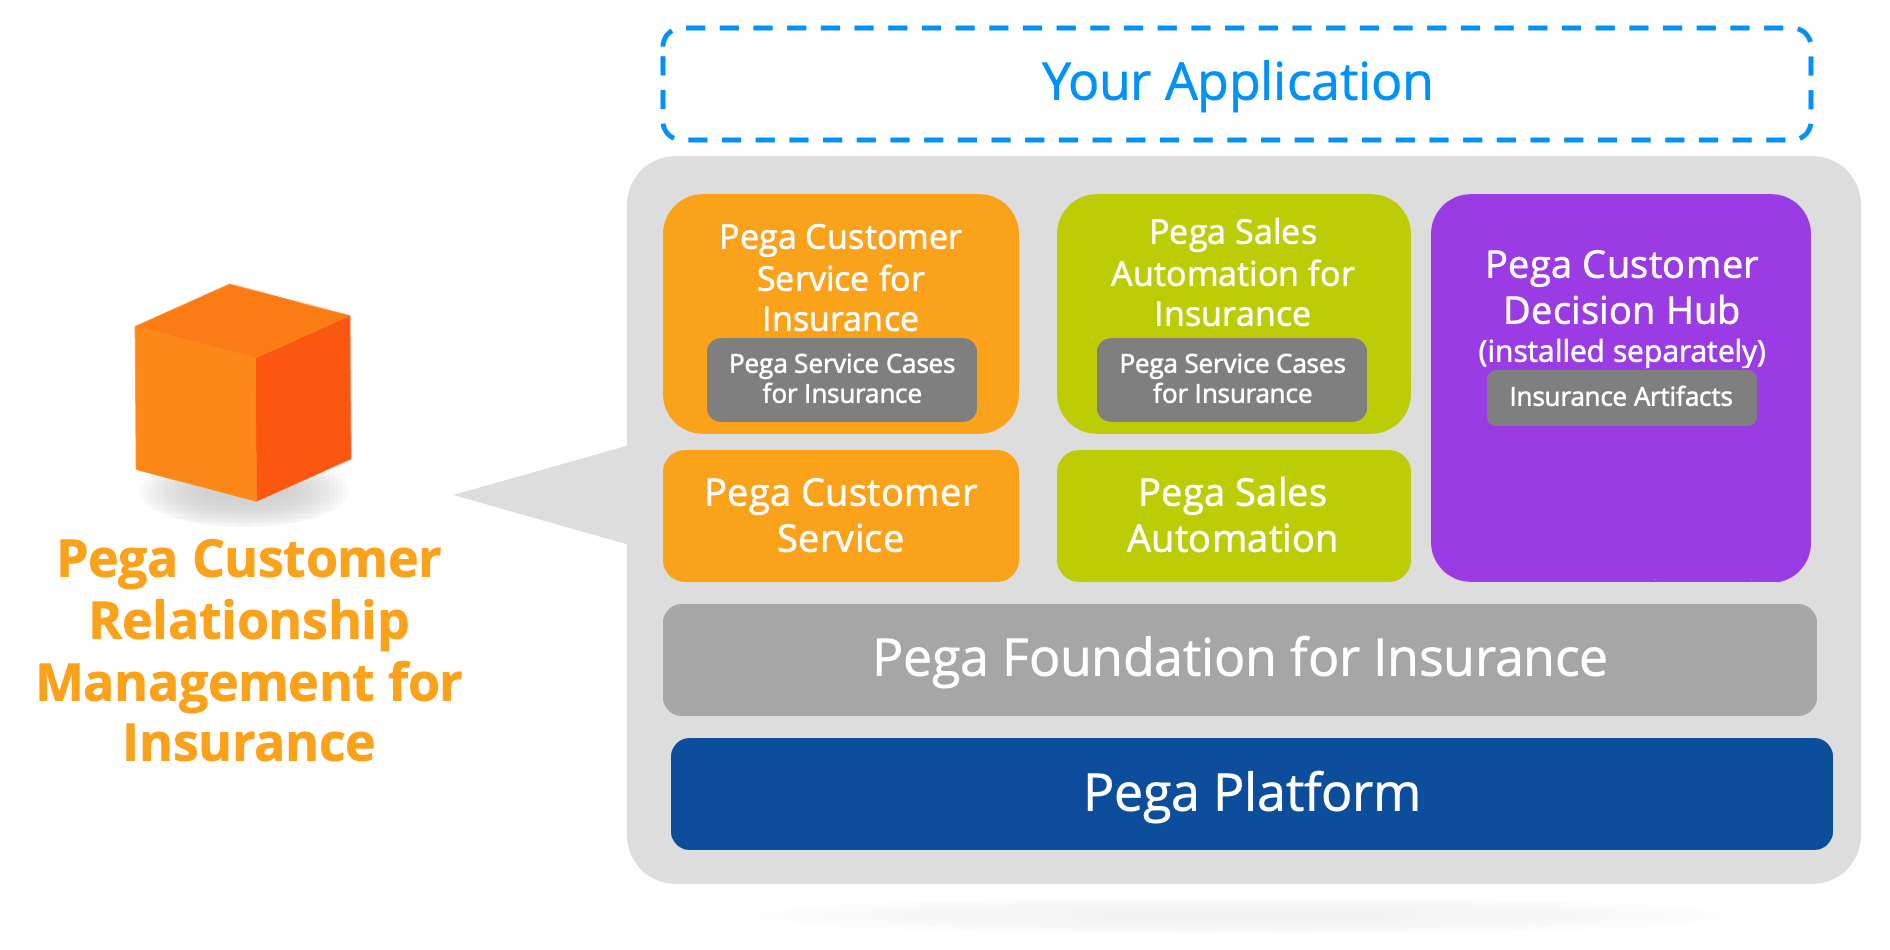 Pega Customer Relationship Management for Insurance application stack